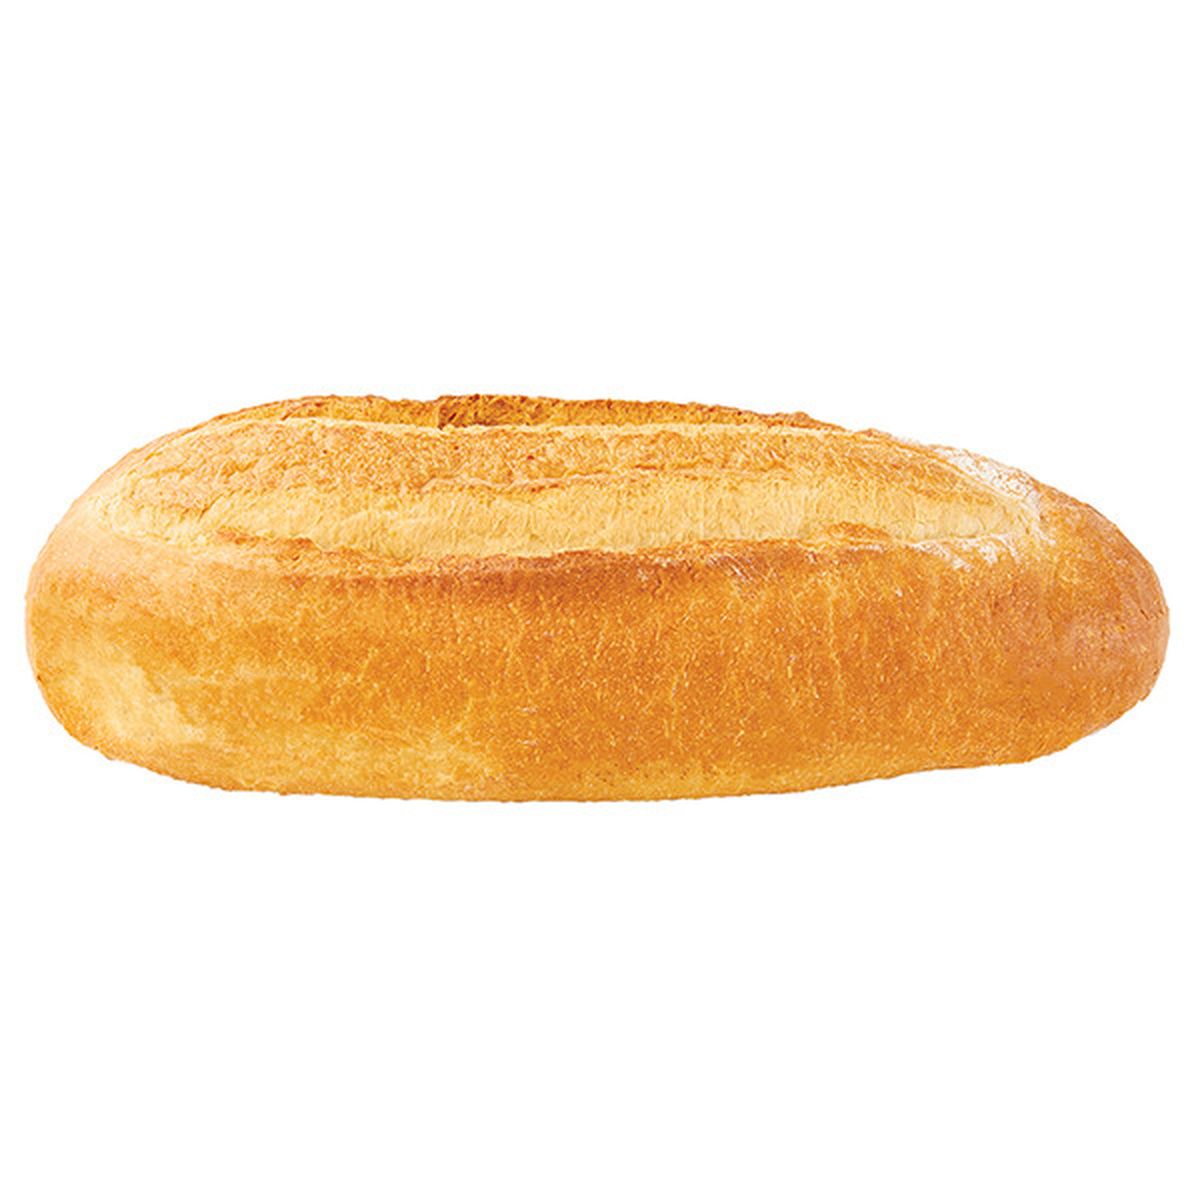 Calories in Wegmans Bread, Pane Italian